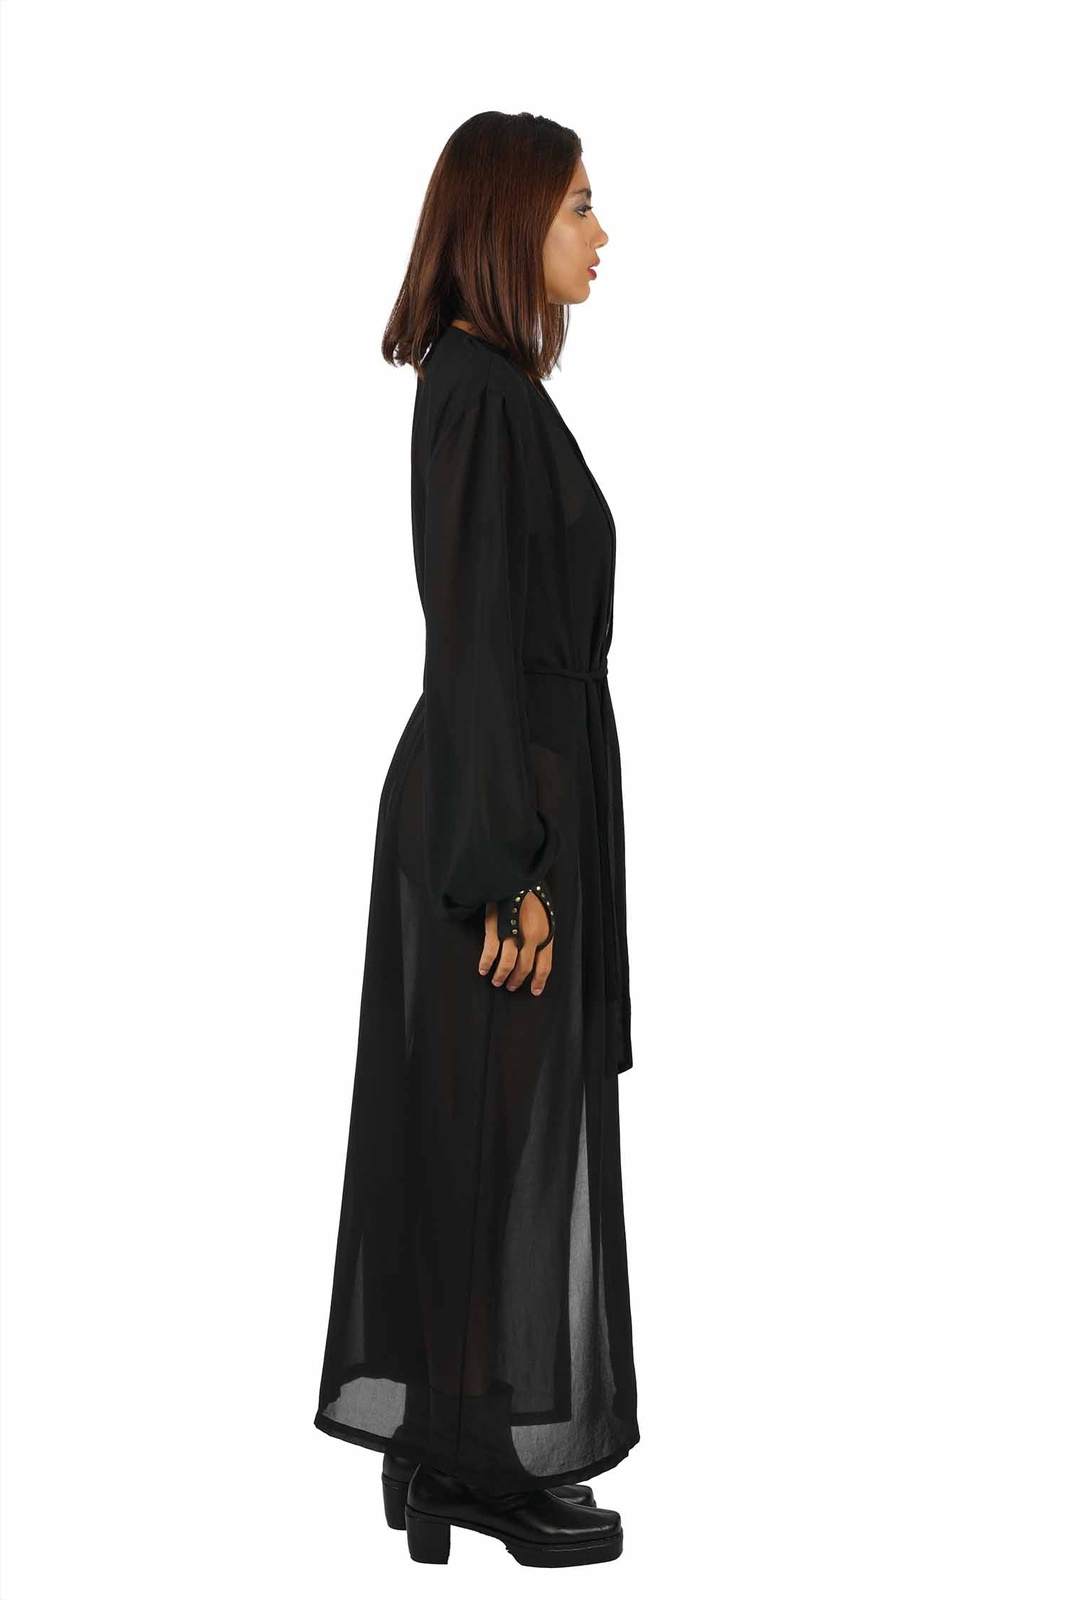 sheer black robe from Love Khaos